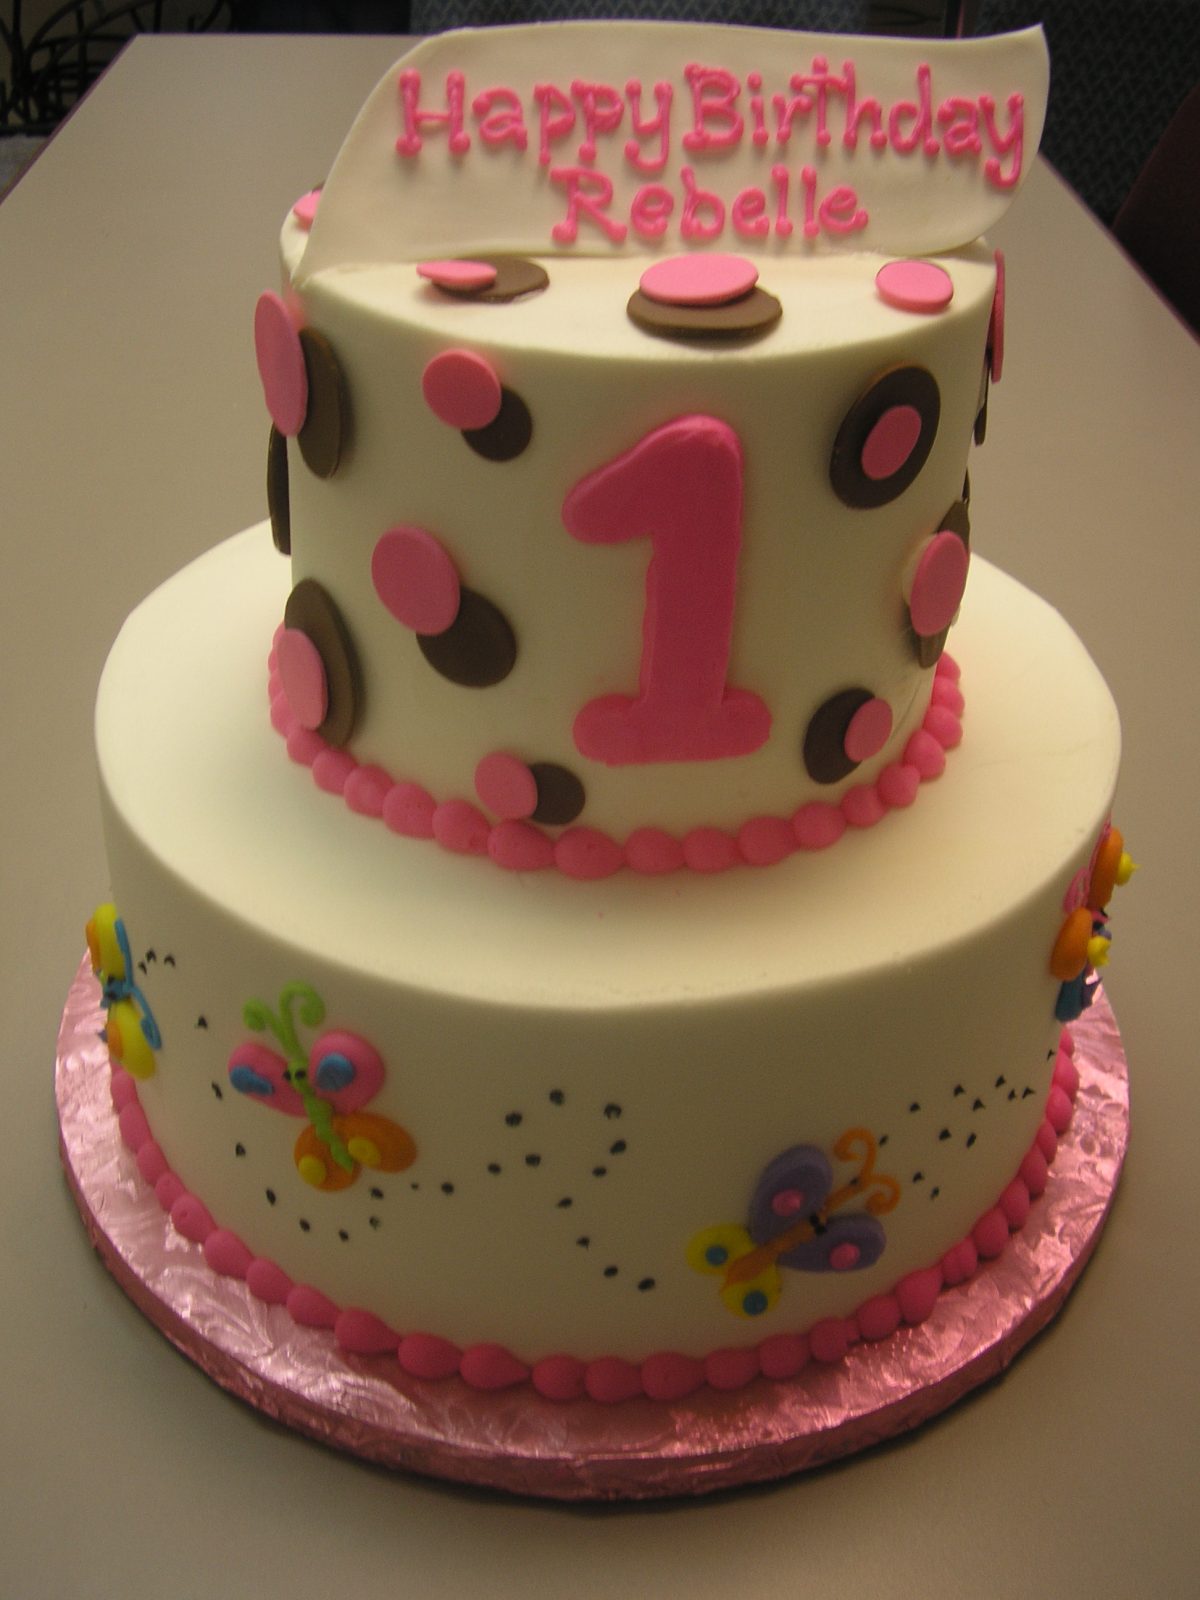 2 tier cake, polka dots, butterflies